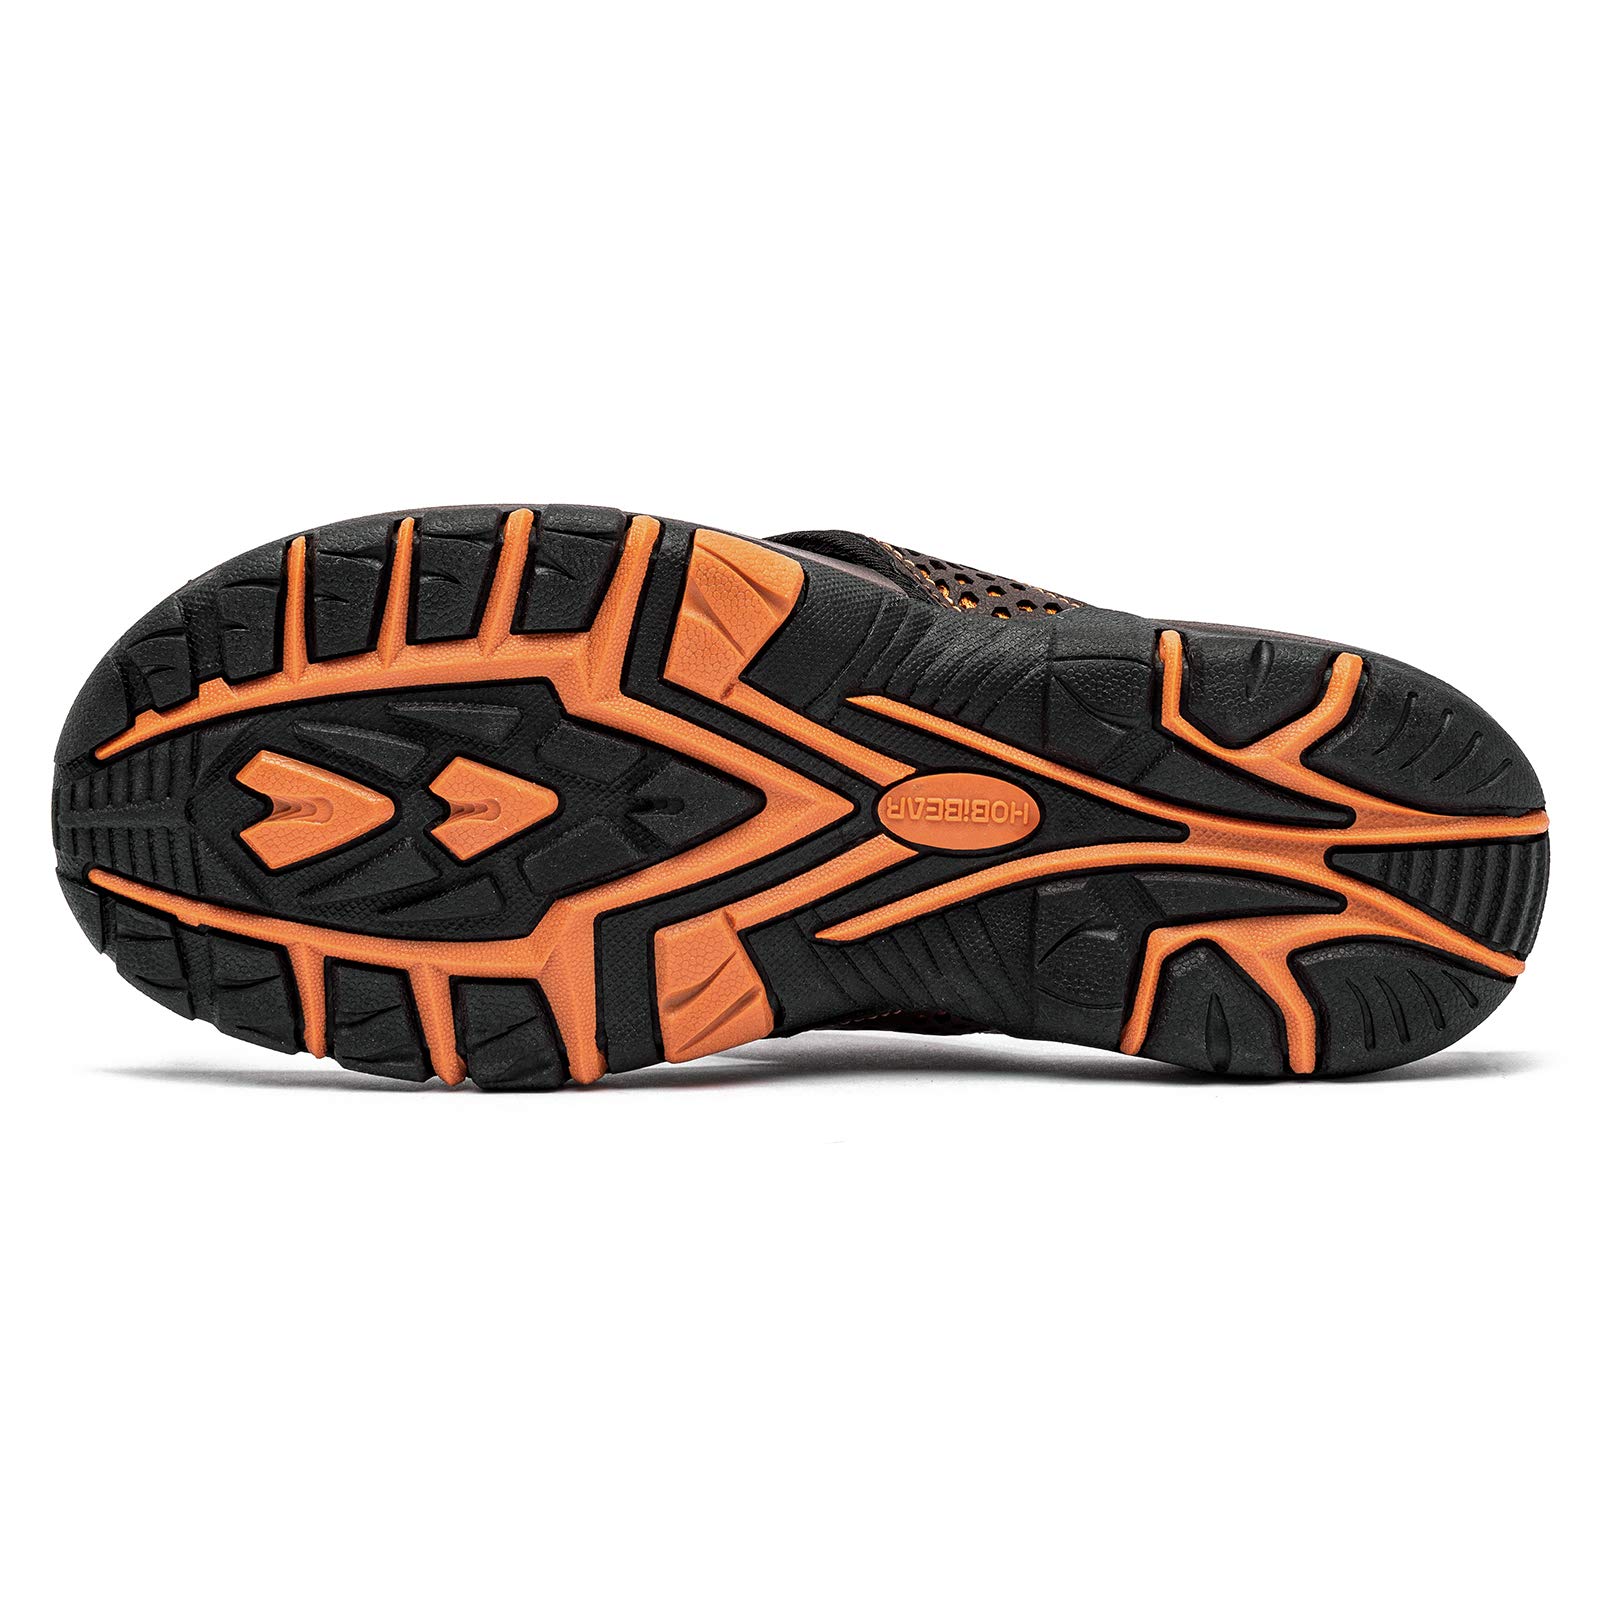 GUBARUN Mens Sport Flip Flops Comfort Casual Thong Sandals Outdoor(Brown 1, 11)